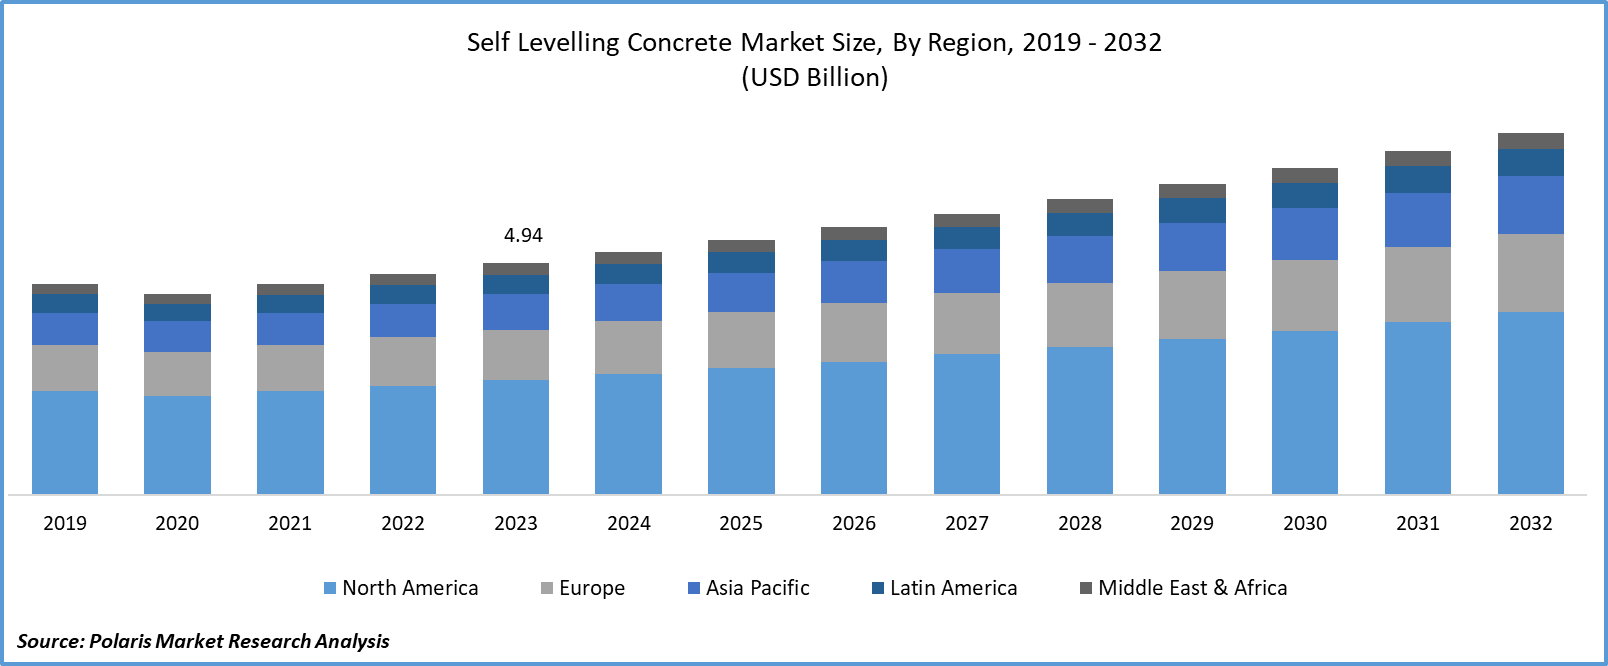 Self-Levelling Concrete Market Size